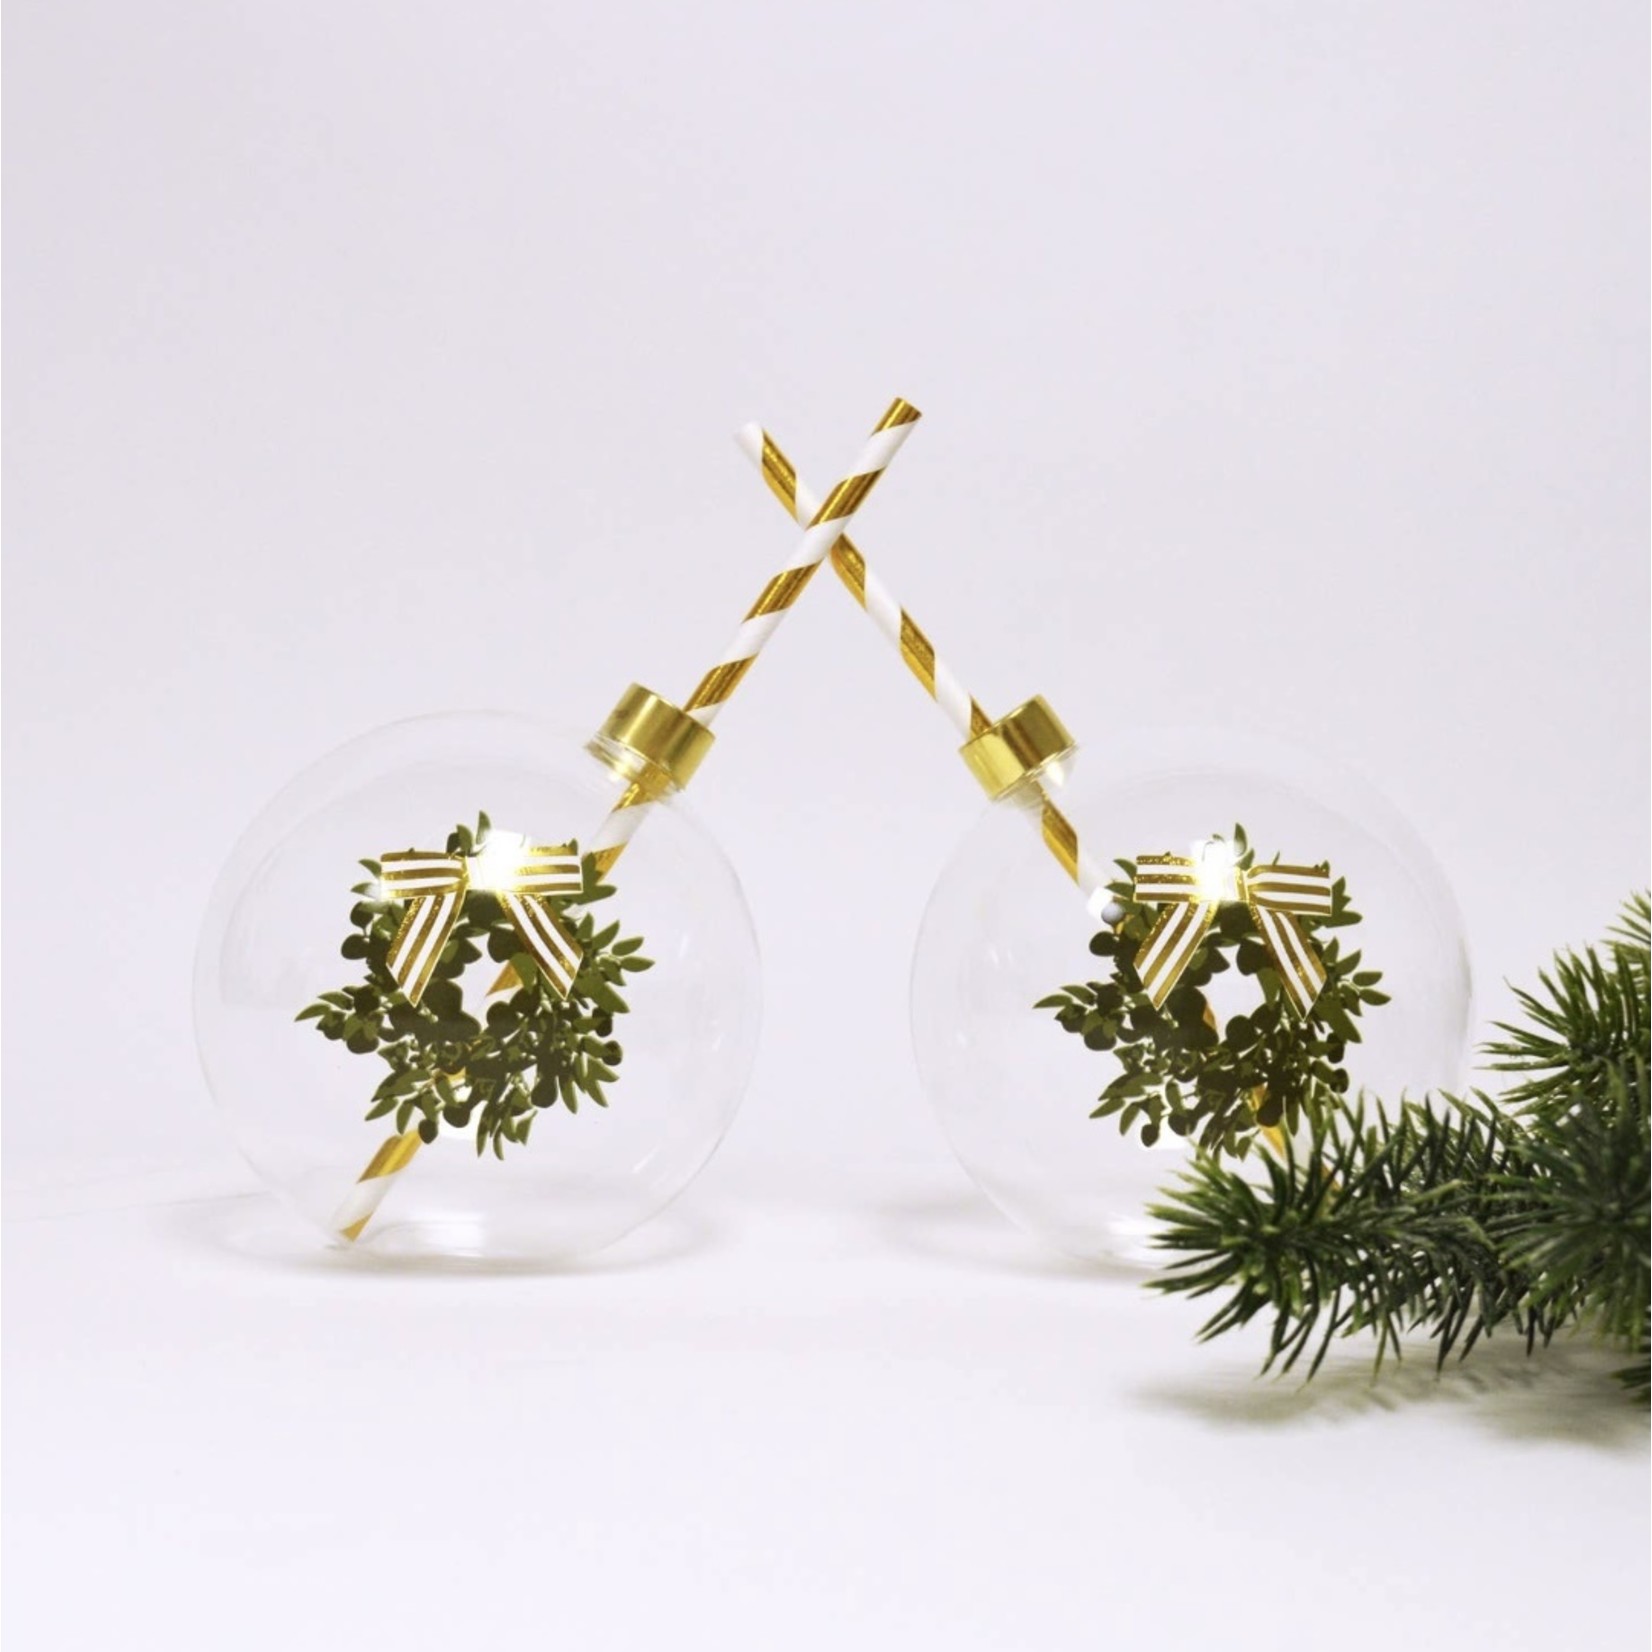 2pc Wreath Ornament Set Glasses